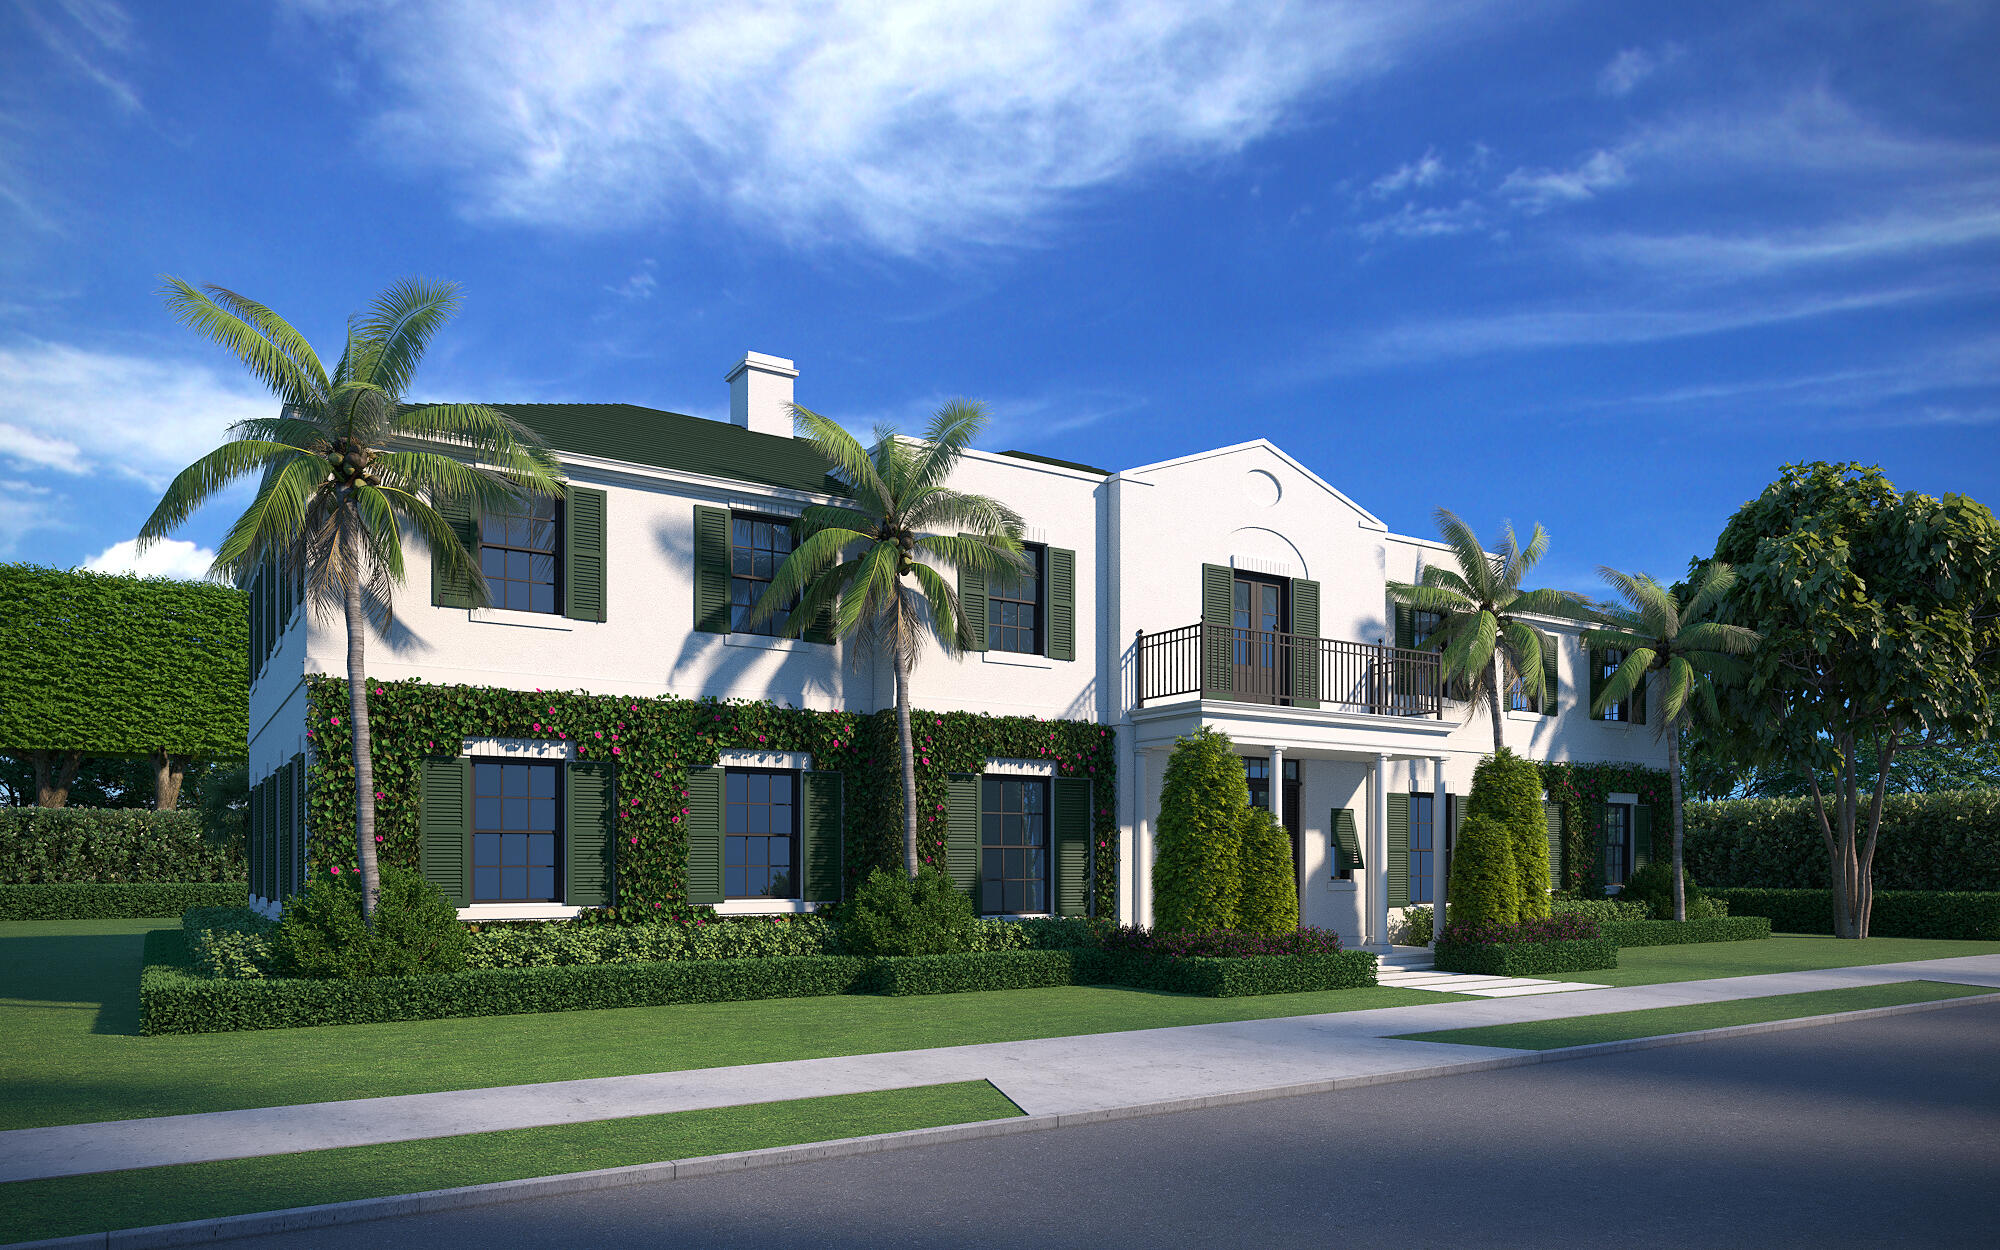 4401 Washington Road, West Palm Beach, Palm Beach County, Florida - 5 Bedrooms  
6.5 Bathrooms - 